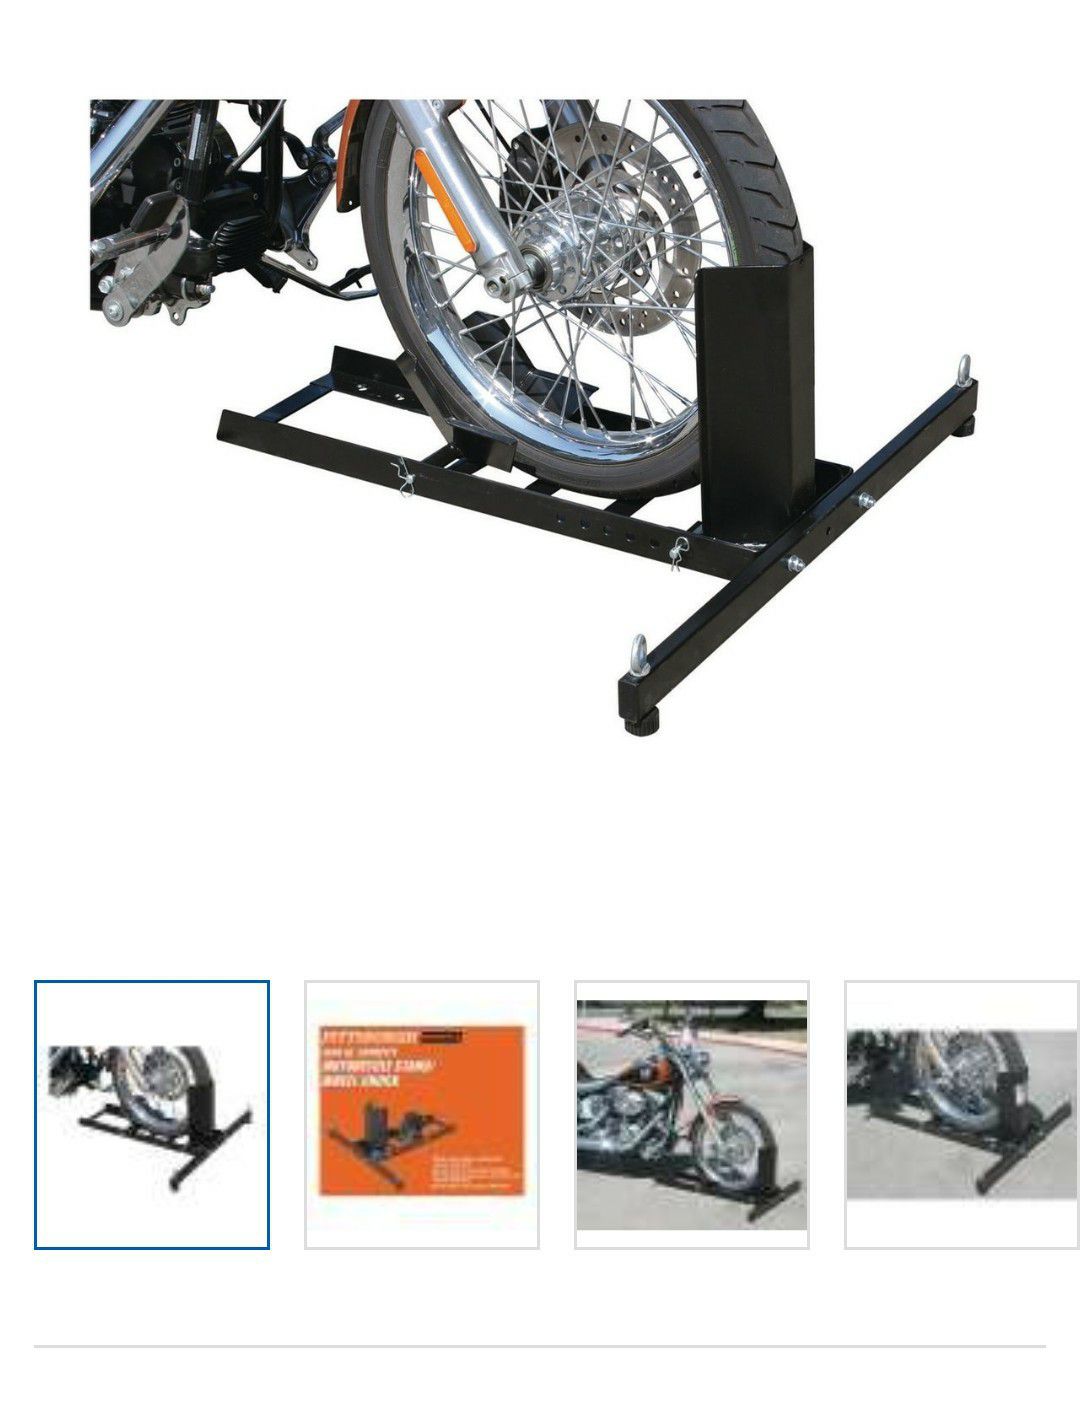 1800 lb capacity Motorcycle stand/Wheel Chock